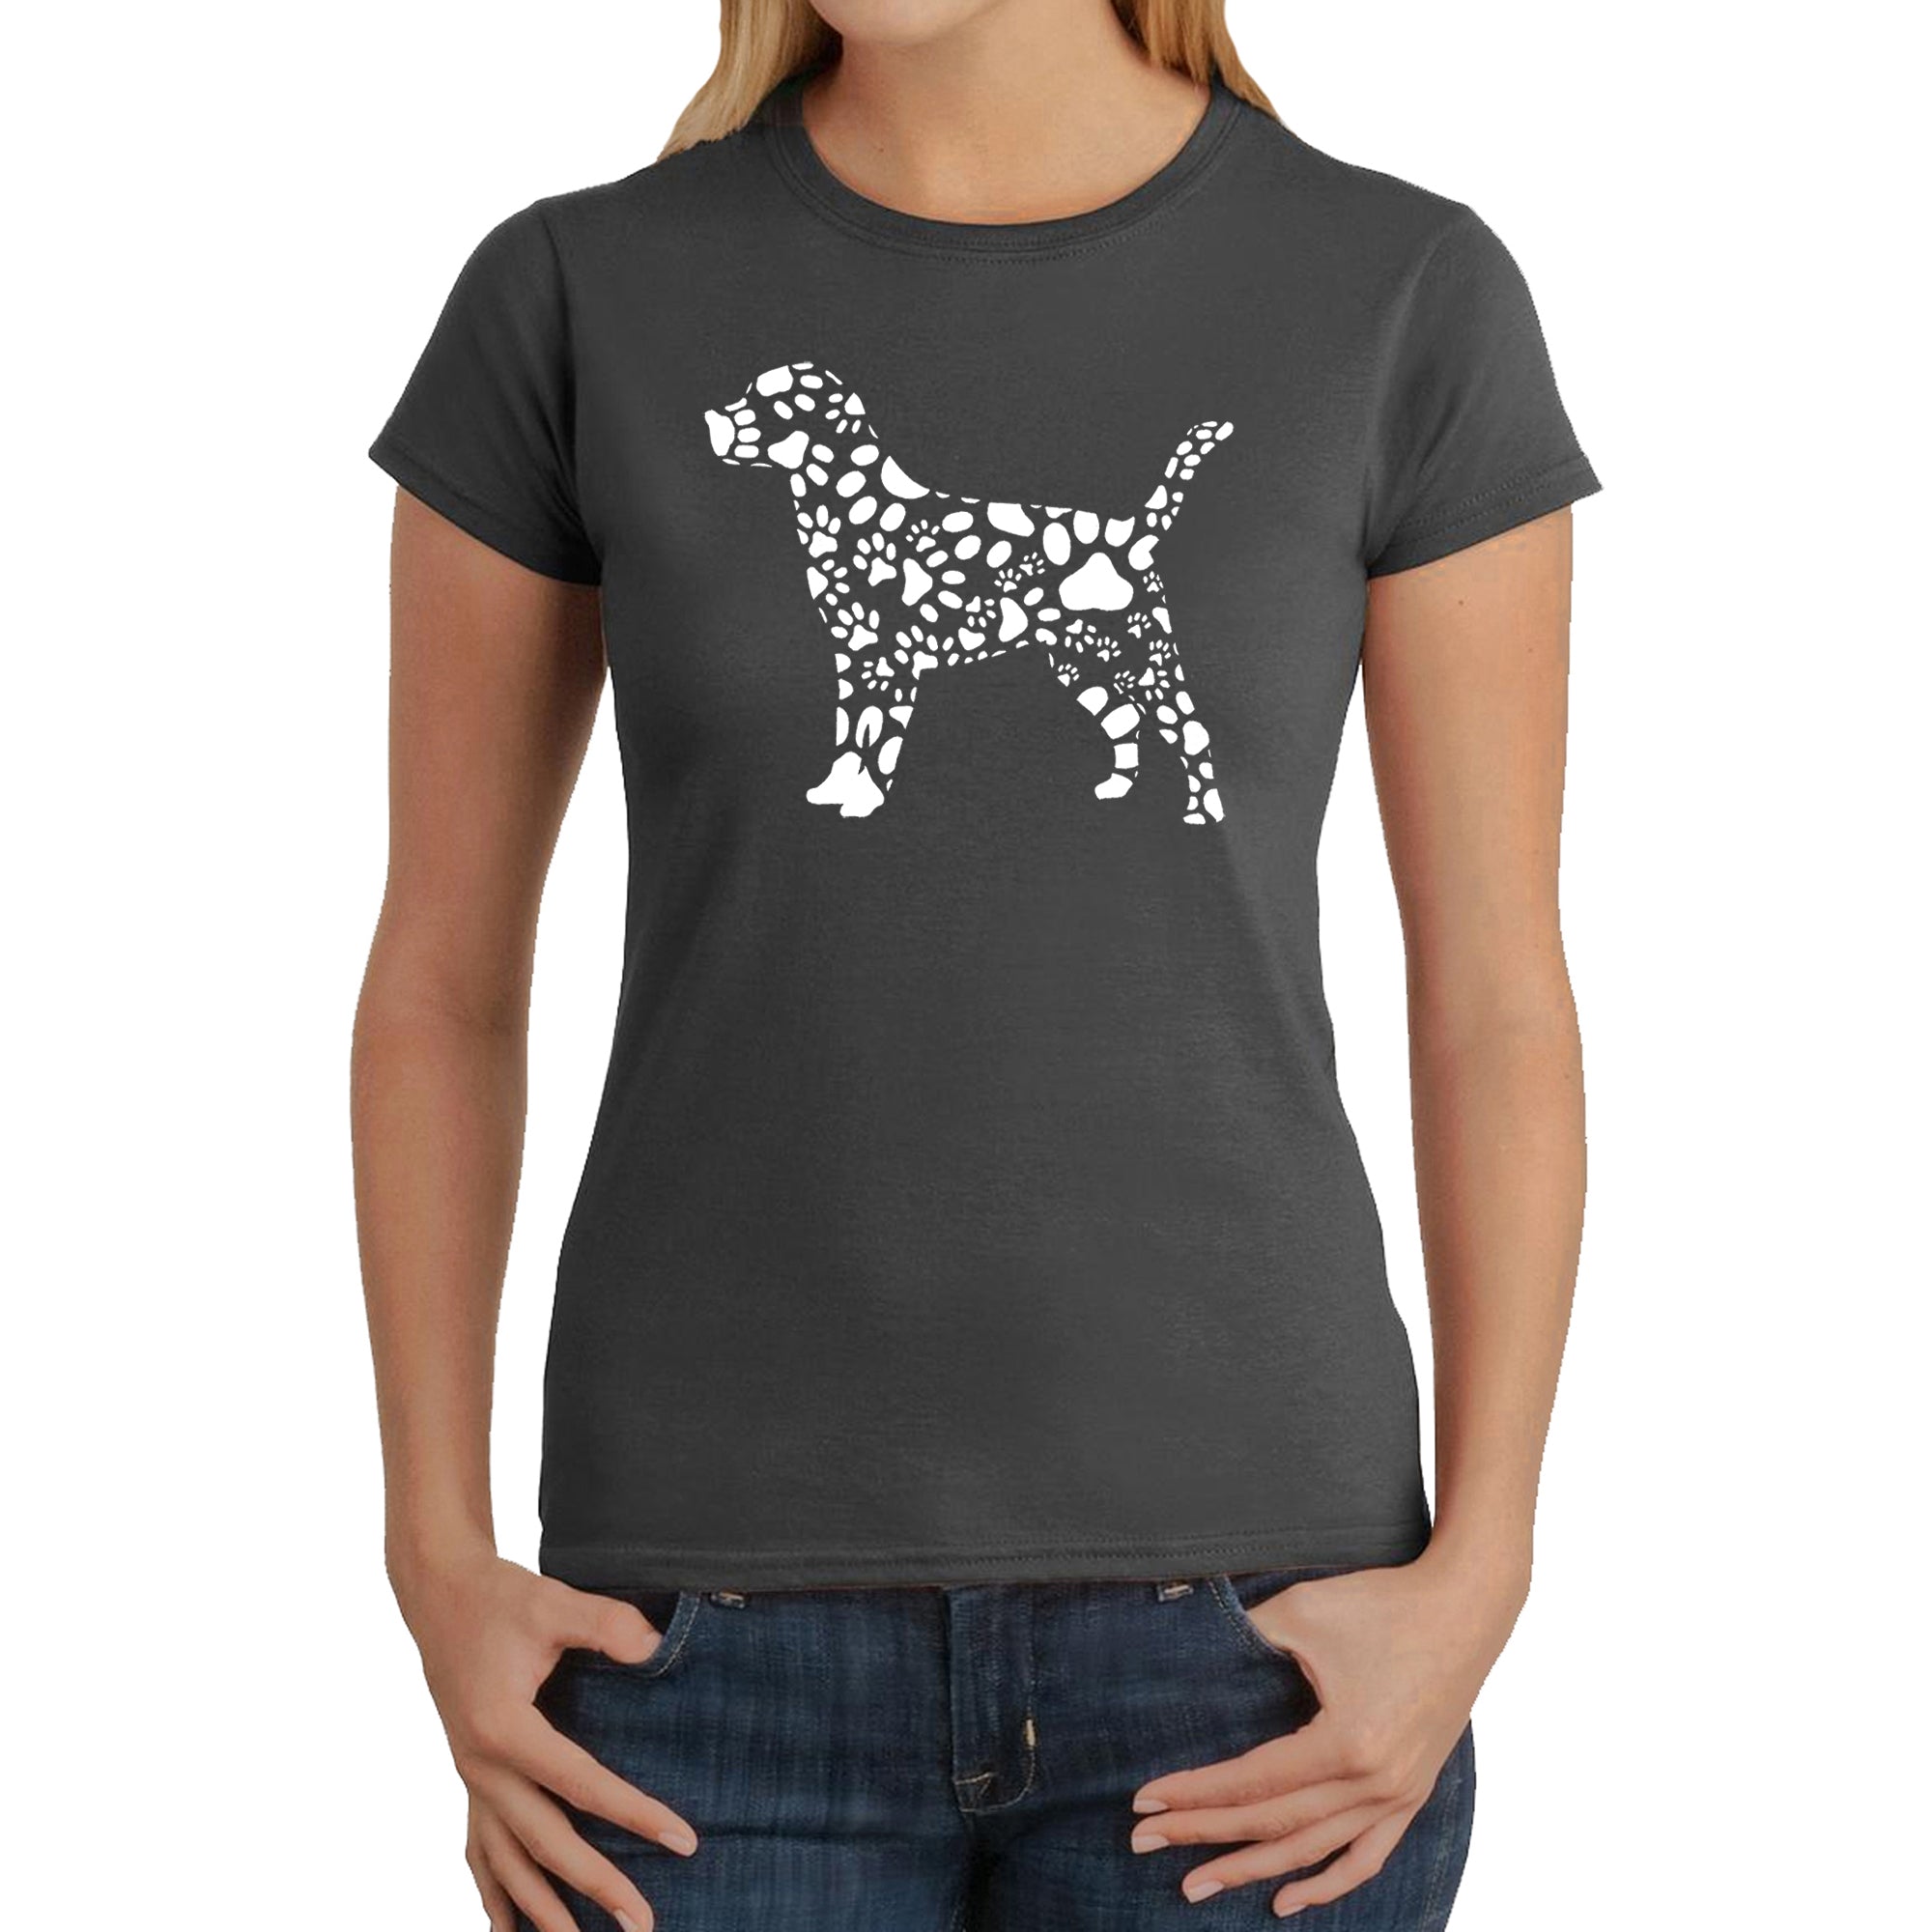 Dog Paw Prints - Women's Word Art T-Shirt - Grey - XX-Large